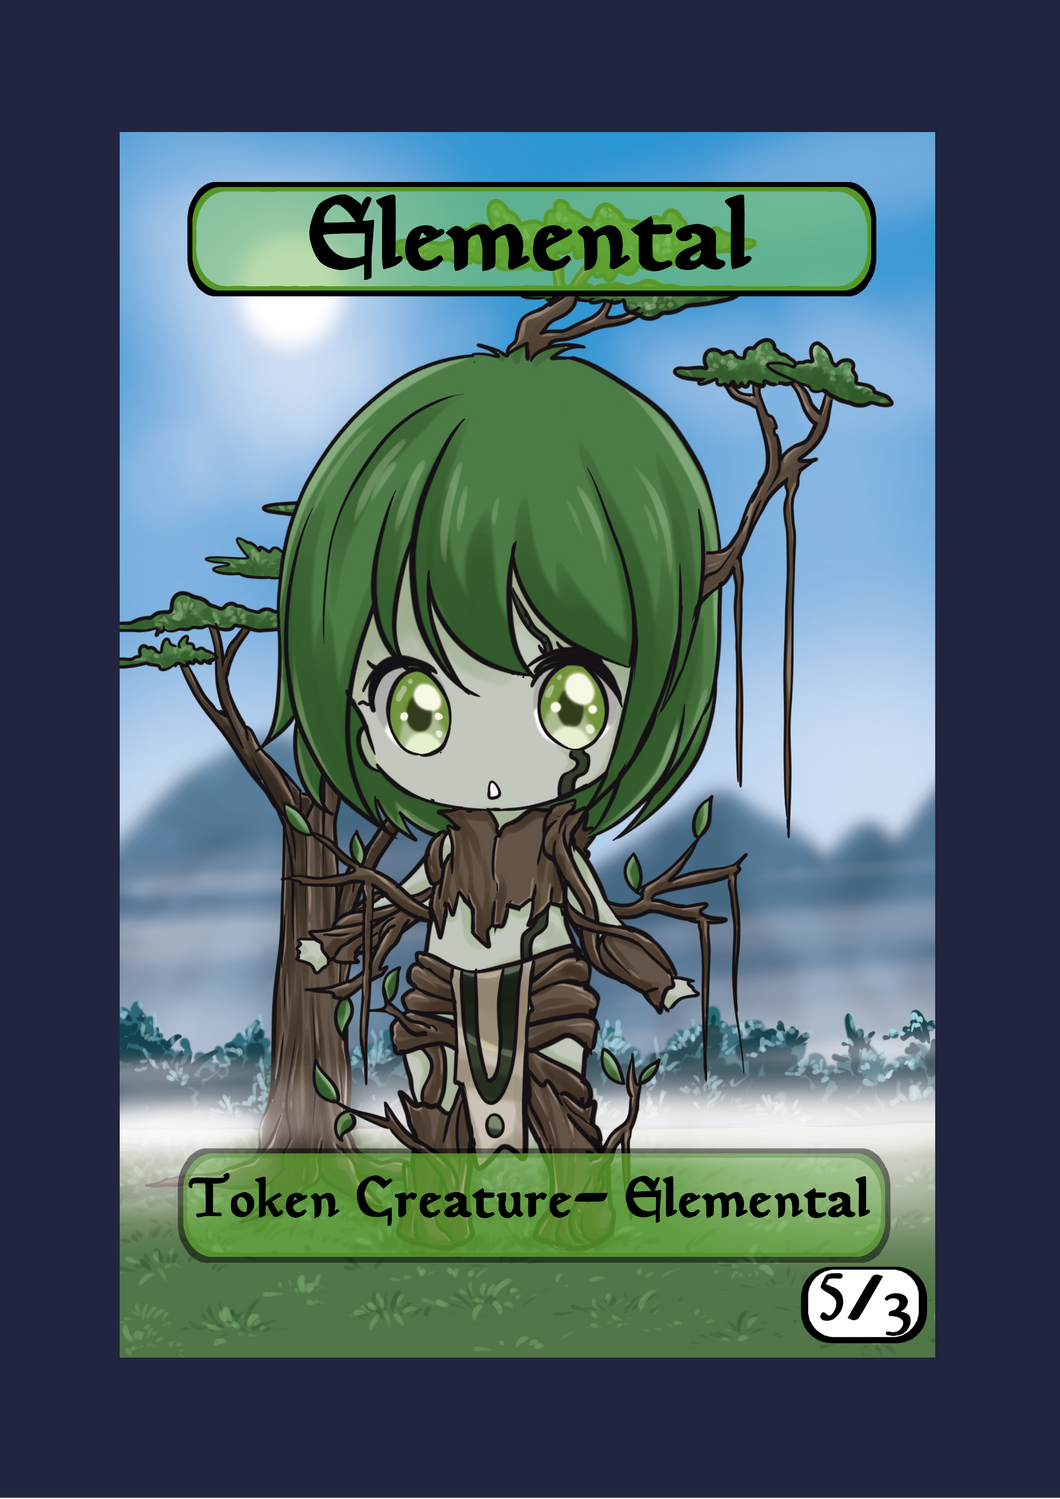 Elemental 5/3 Token